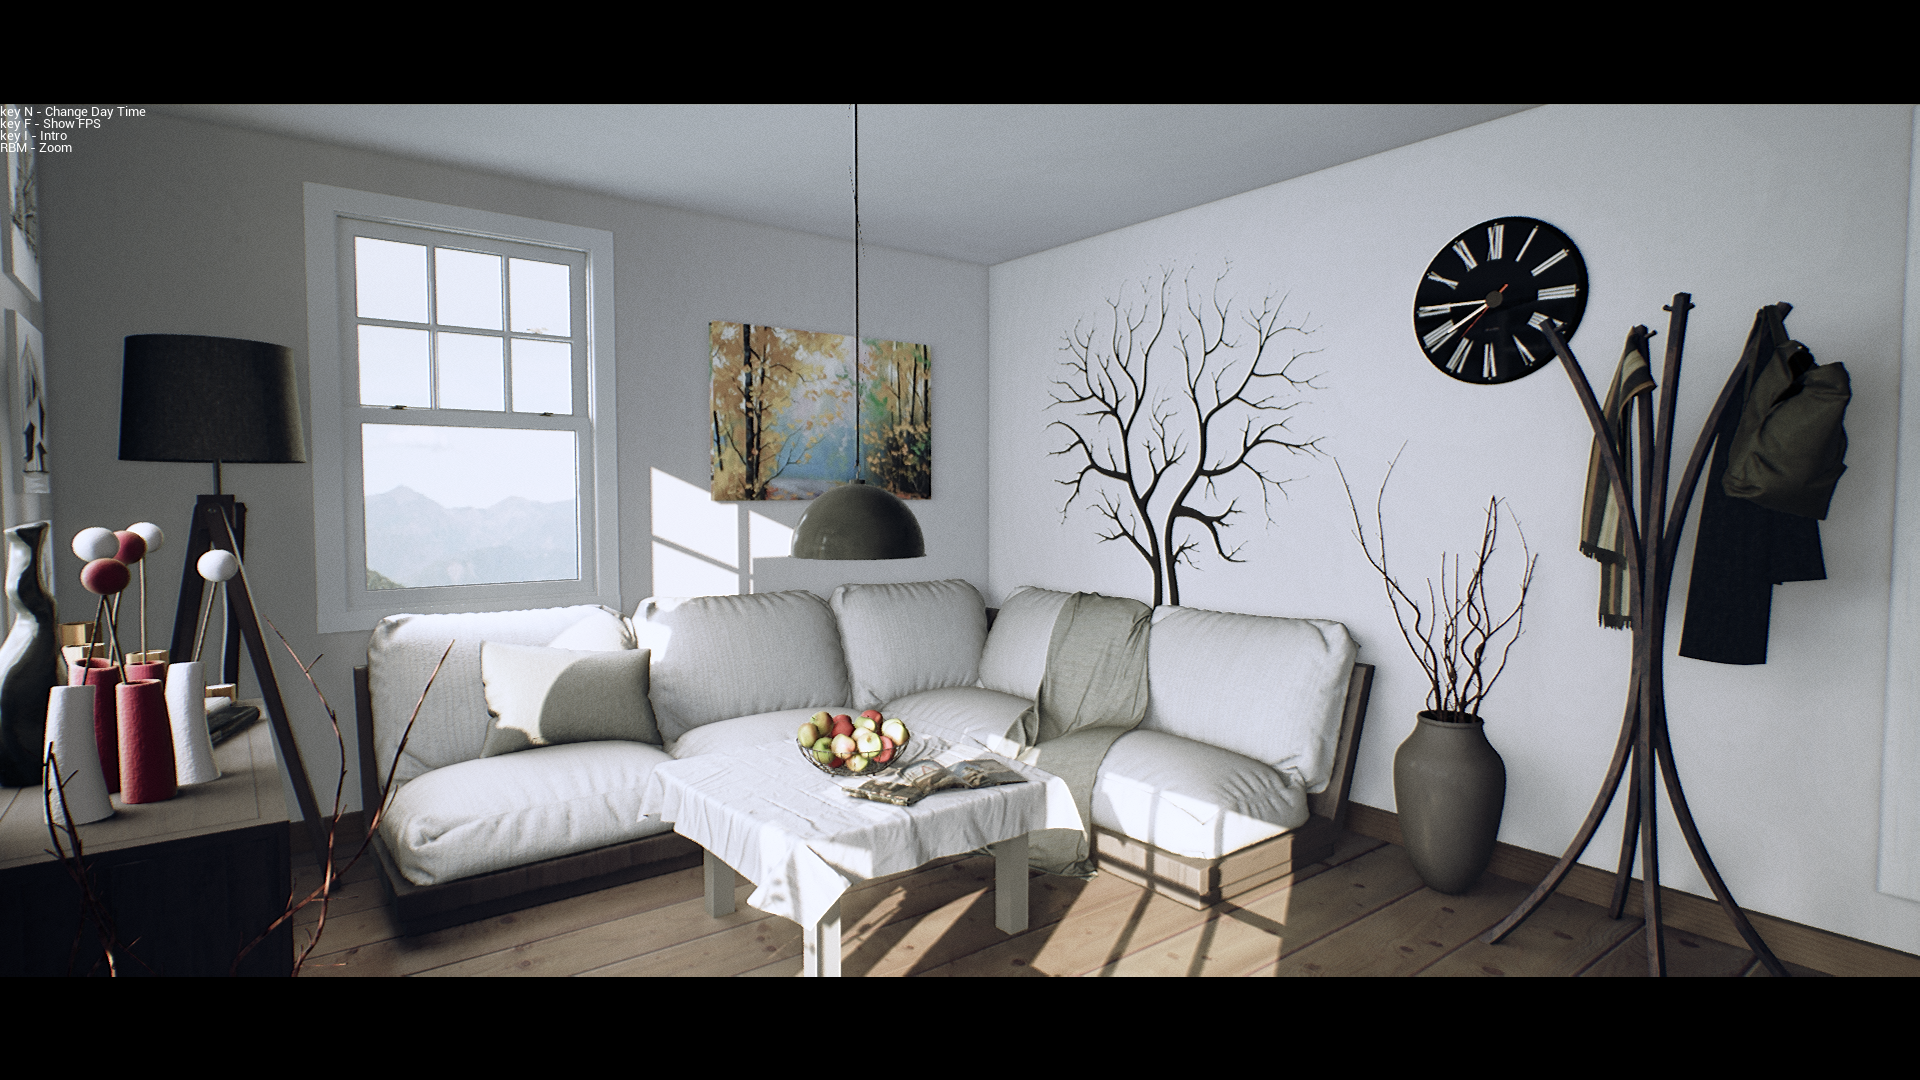 General 1920x1080 Unreal Engine 4  Archviz CGI interior digital art indoors